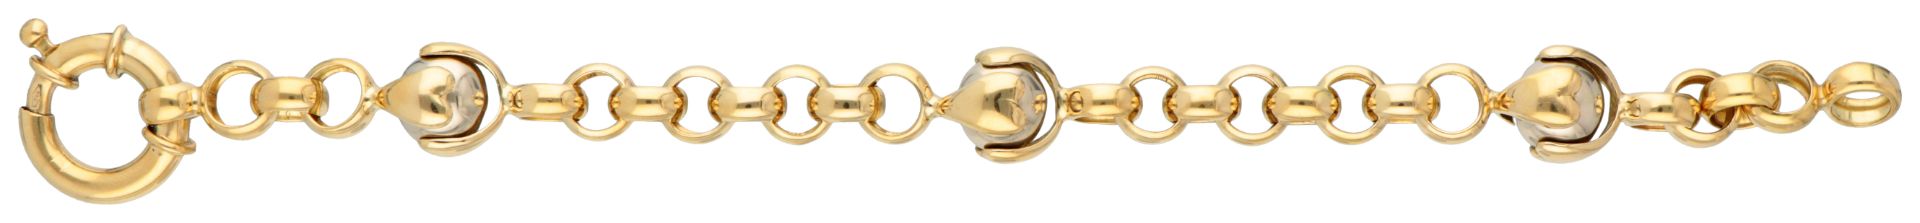 Italian 18K yellow gold anchor link bracelet. - Image 3 of 3